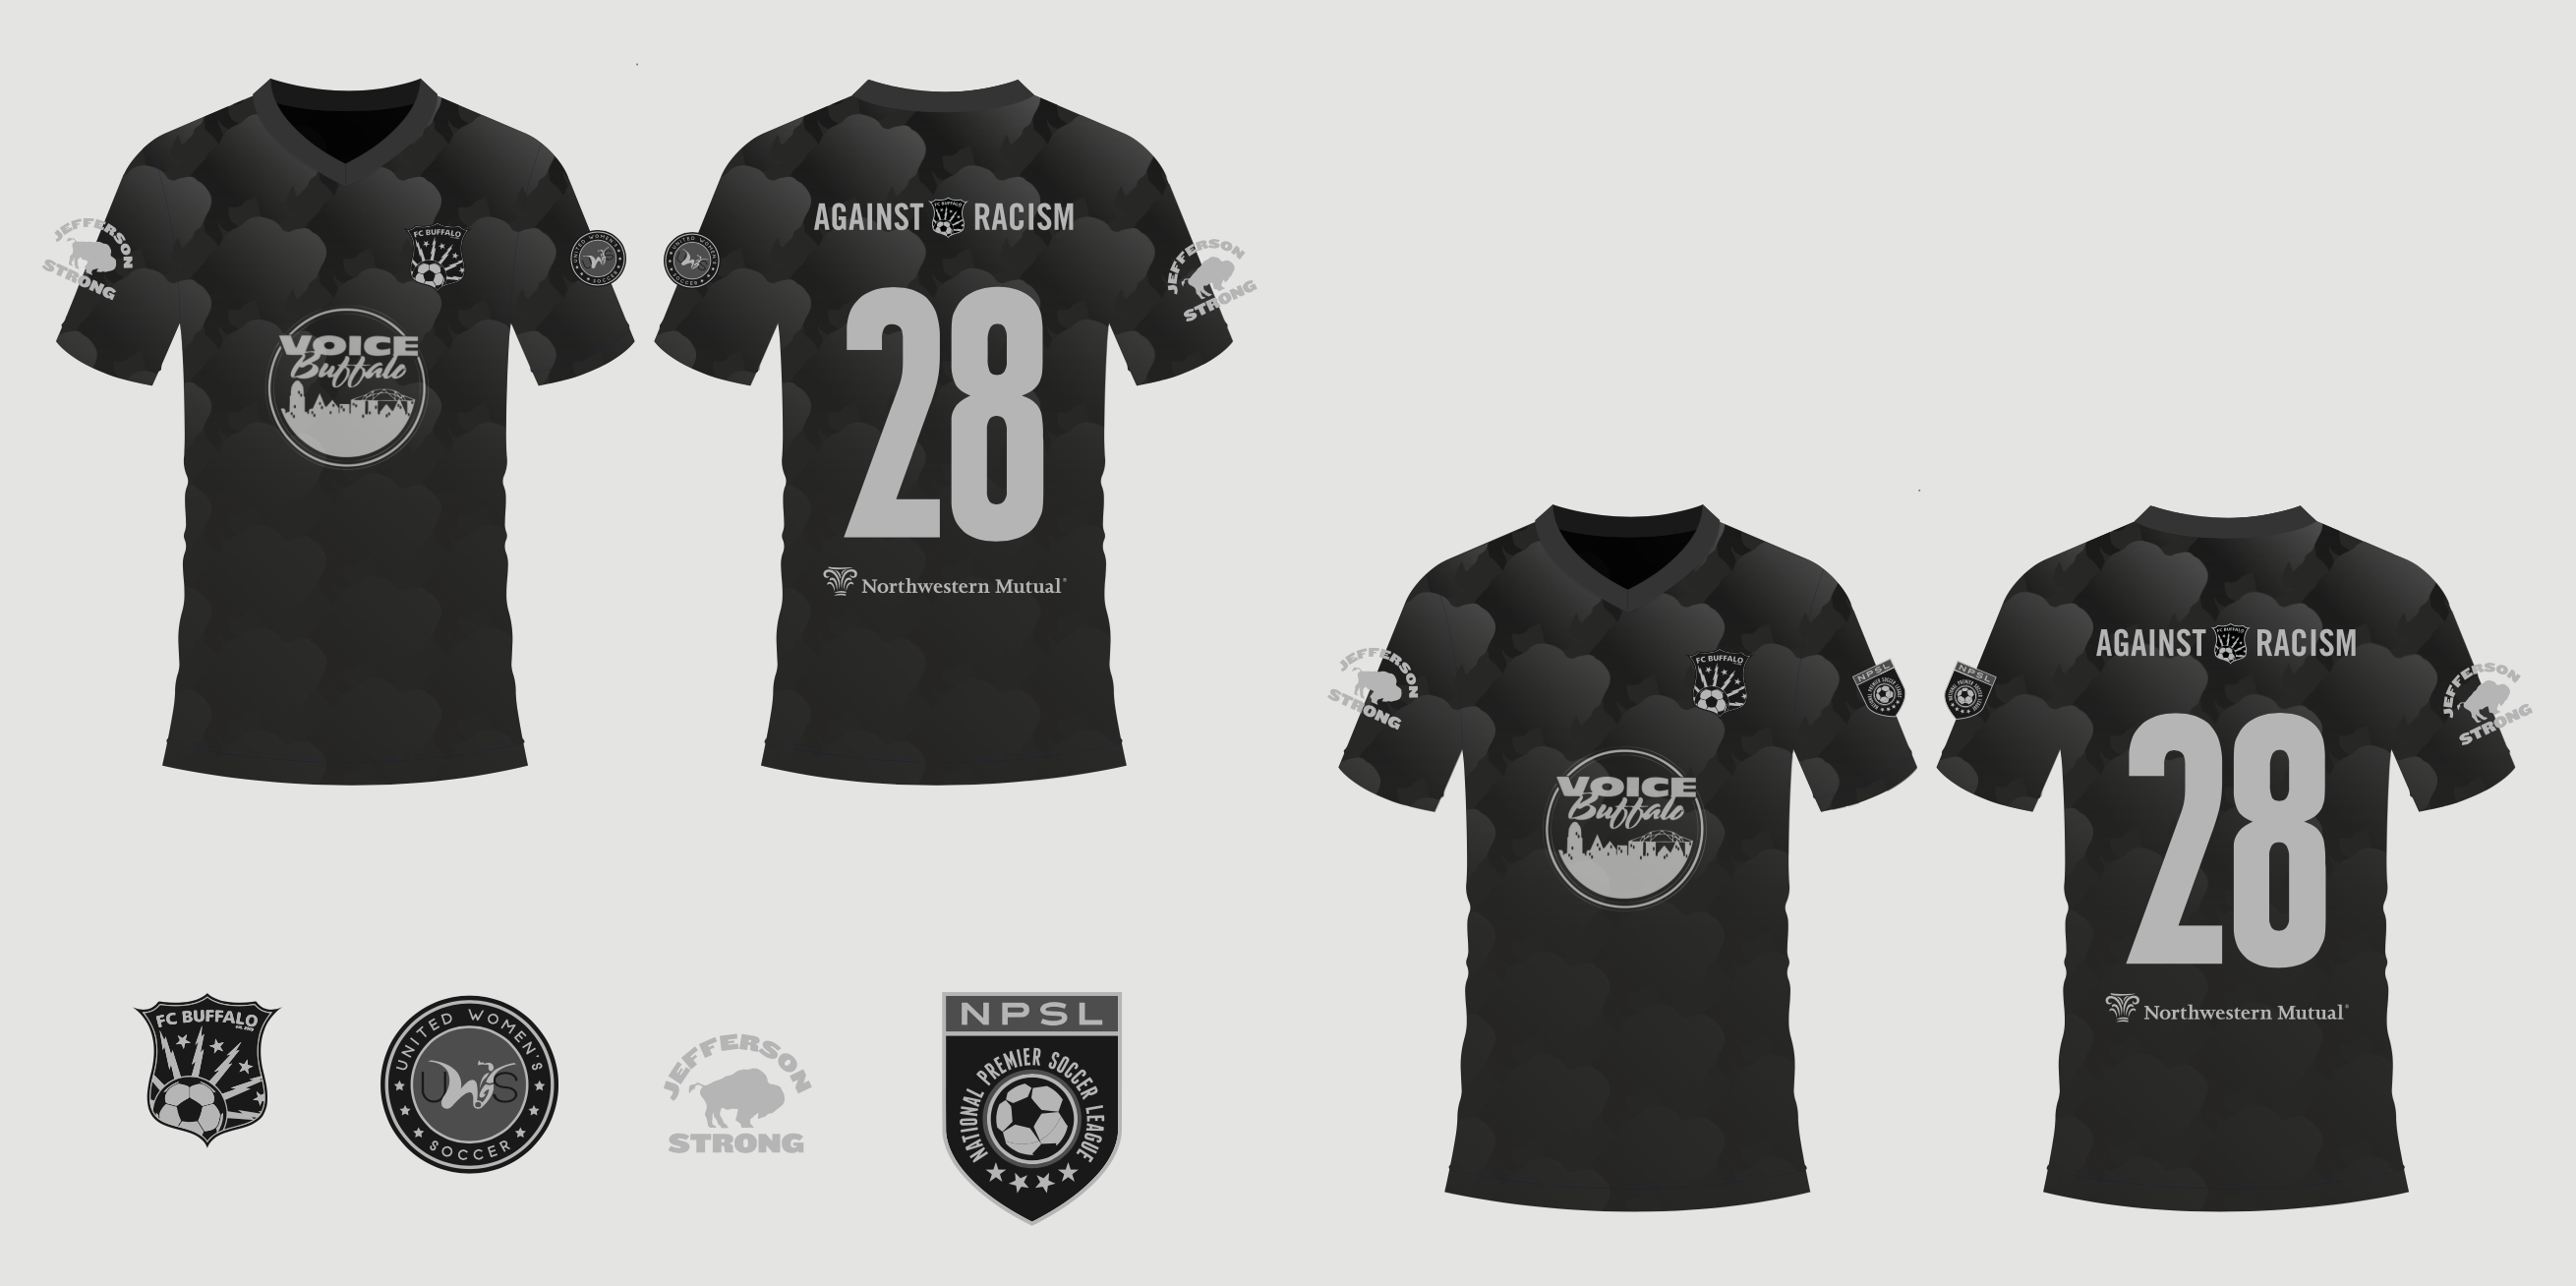 Announcing FC Buffalo's 2022 Change Kit